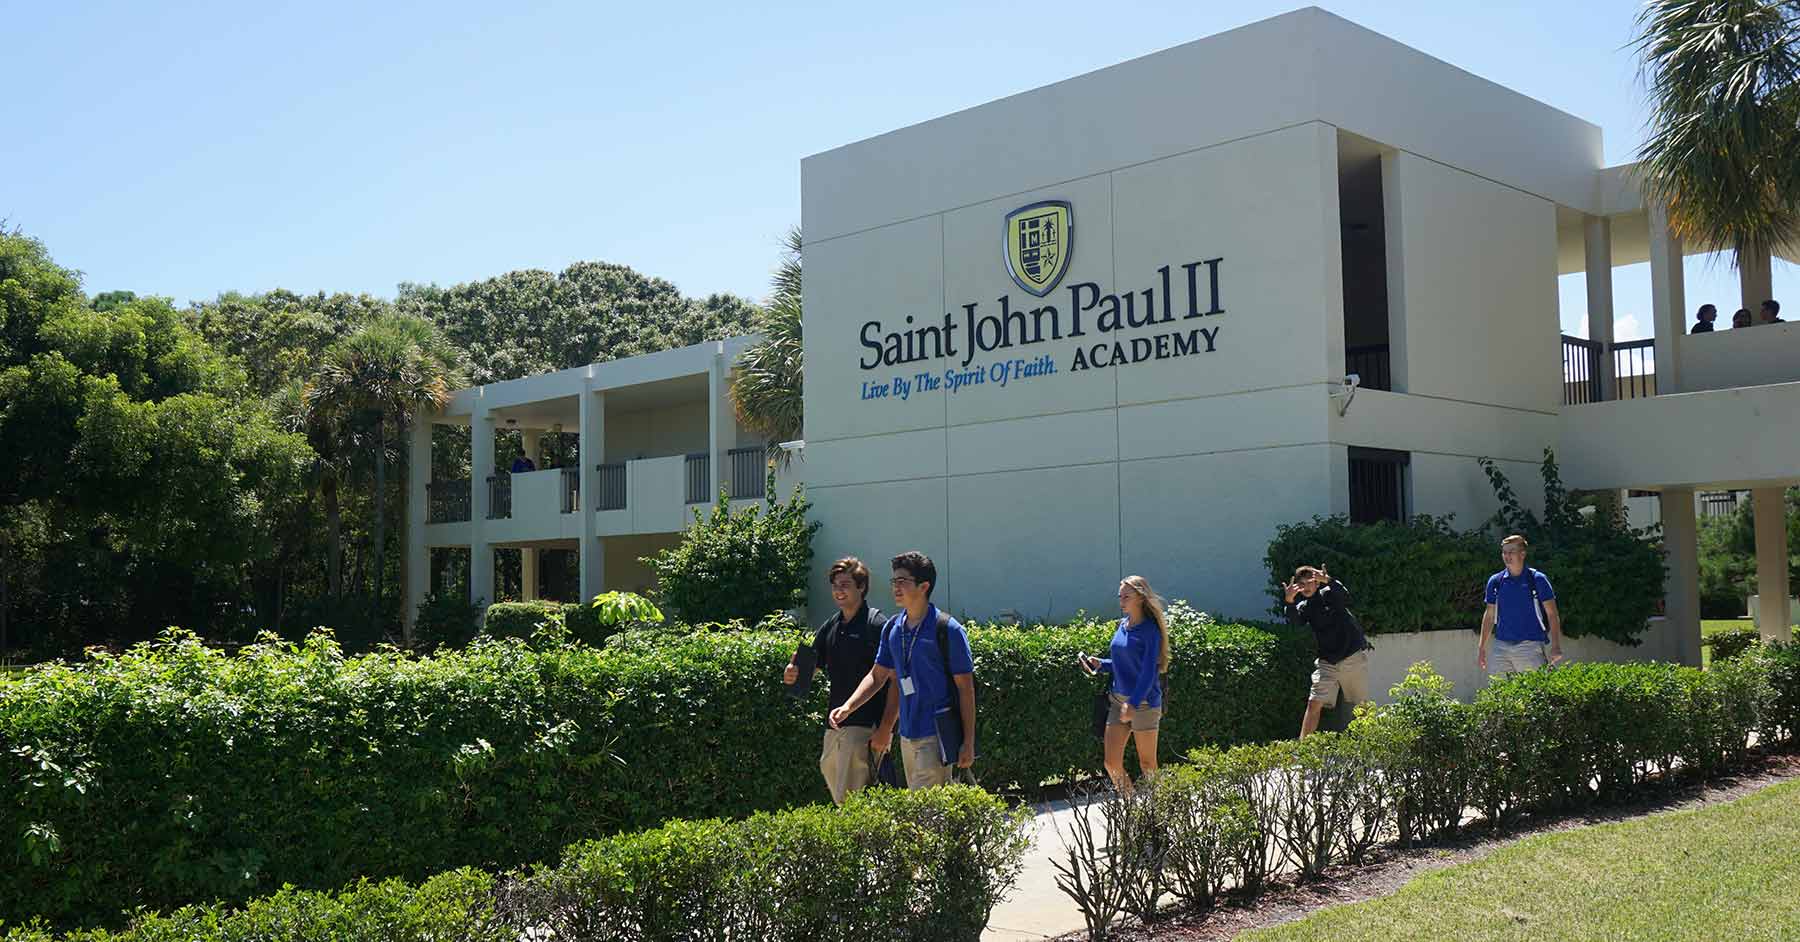 Saint John Paul II Academy